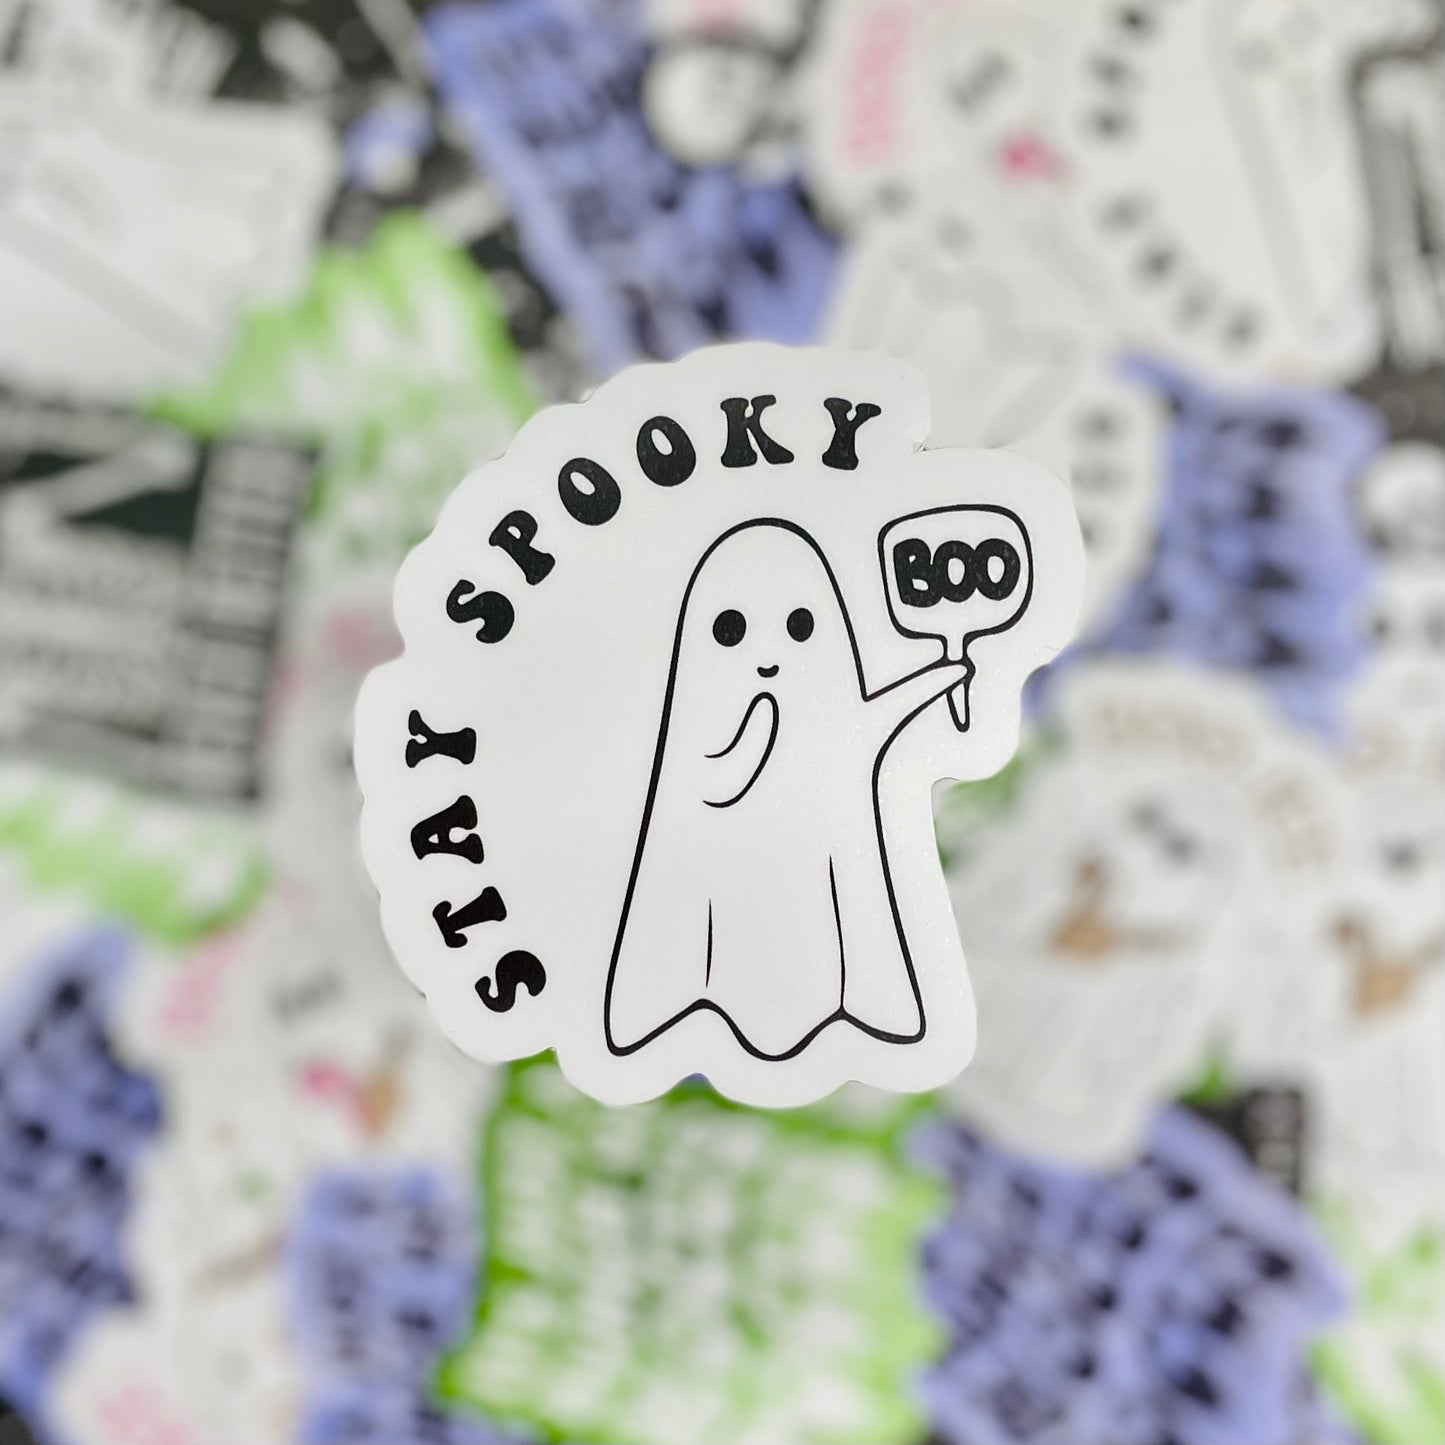 Vinyl Sticker - Stay Spooky - 3" Sticker